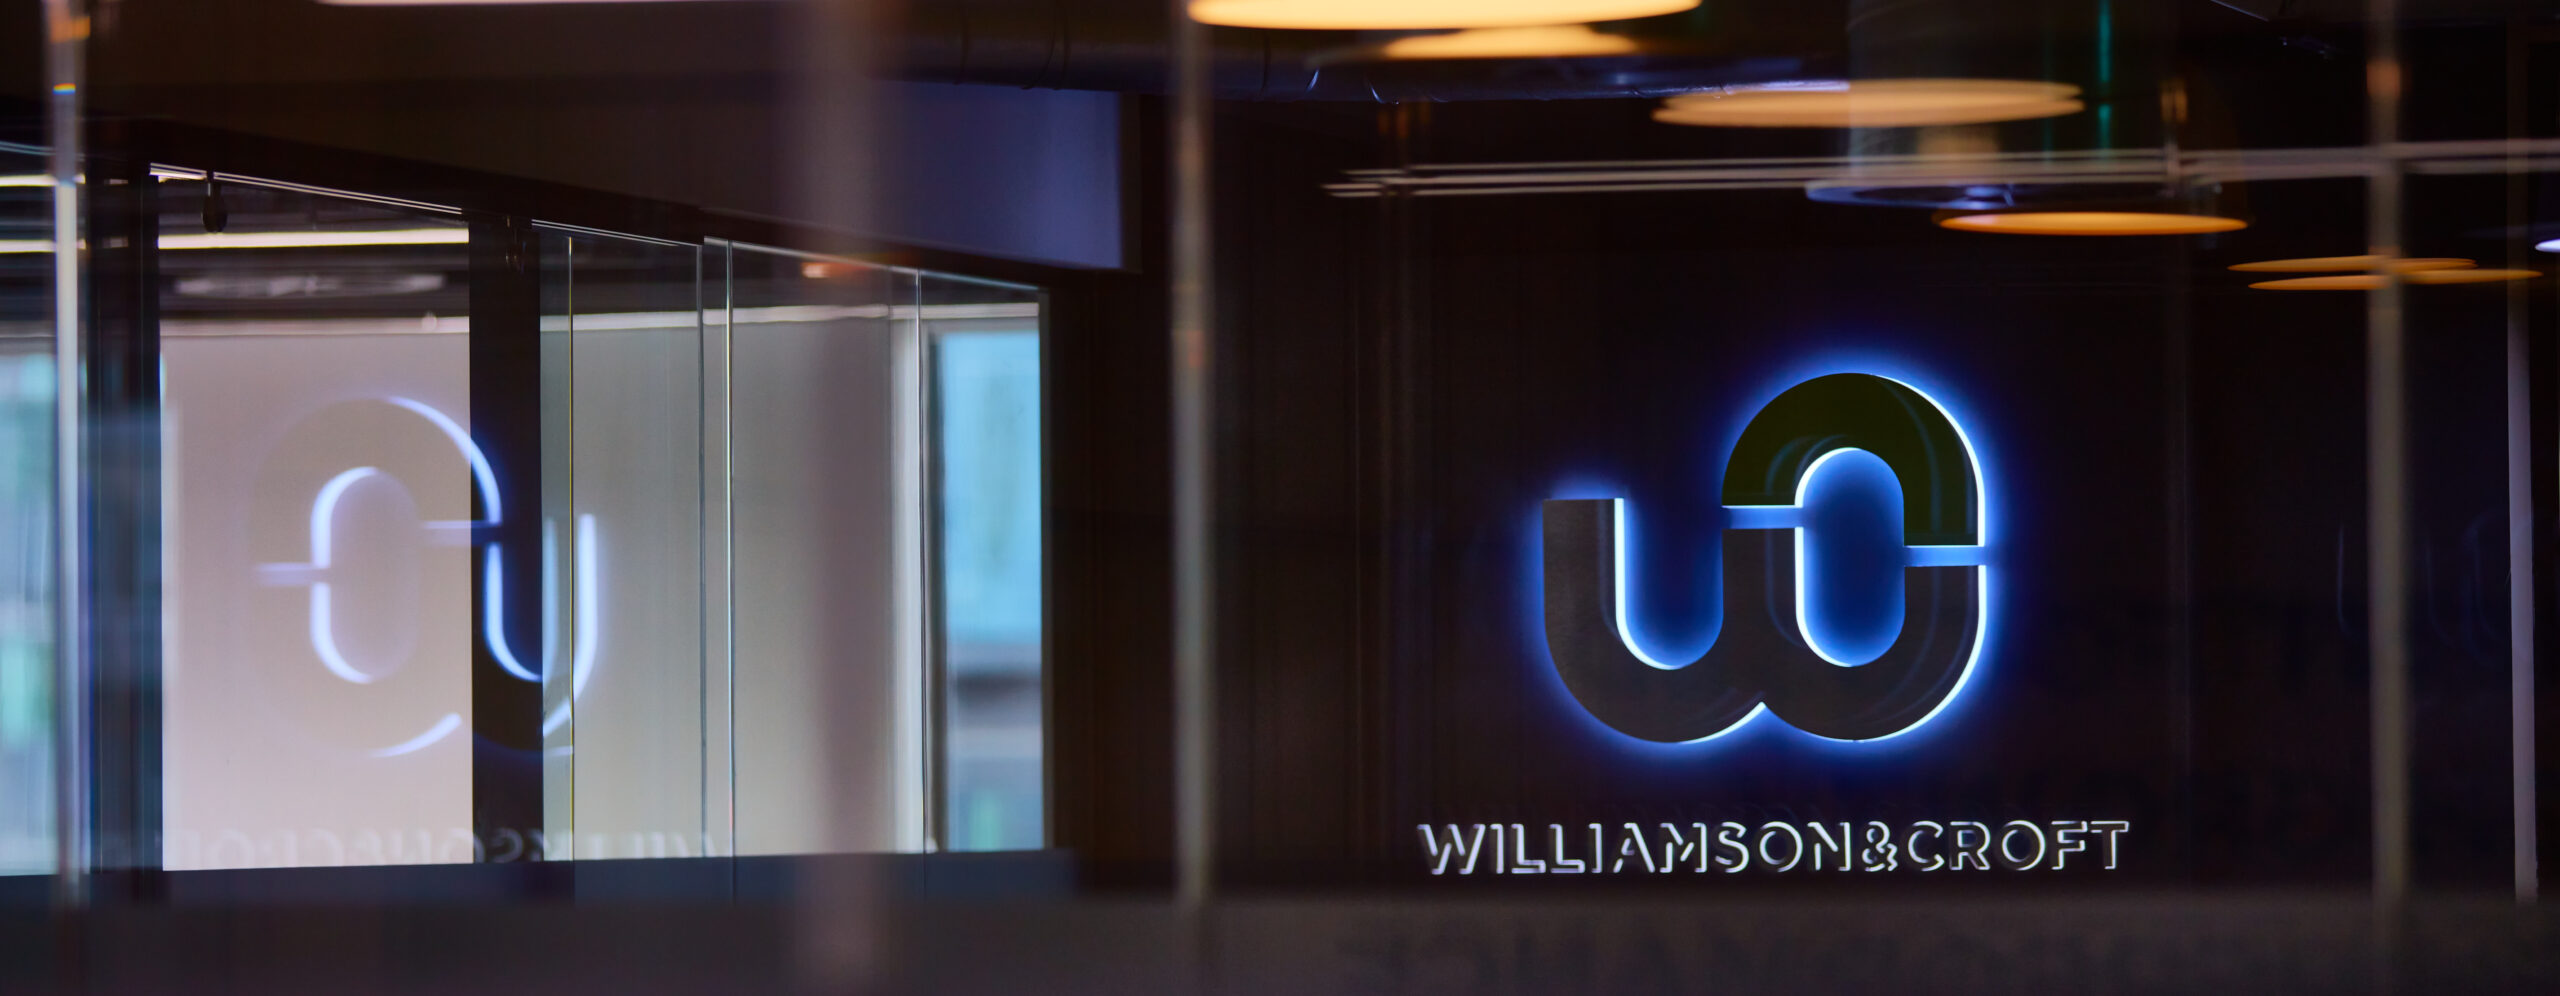 Williamson & Croft logo in offices